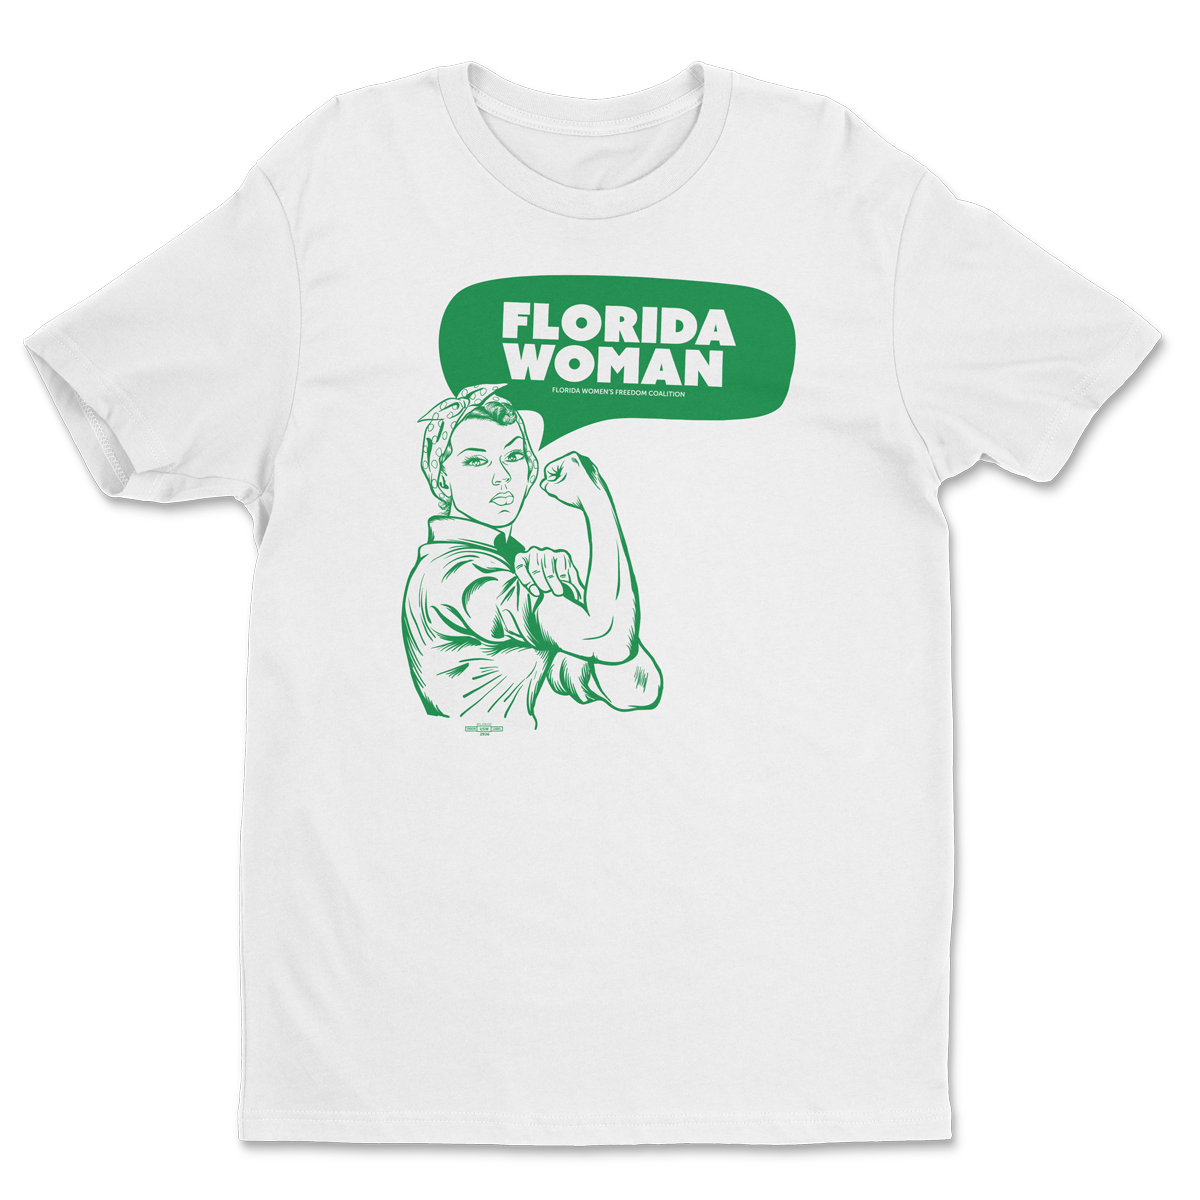 Florida Woman Tee